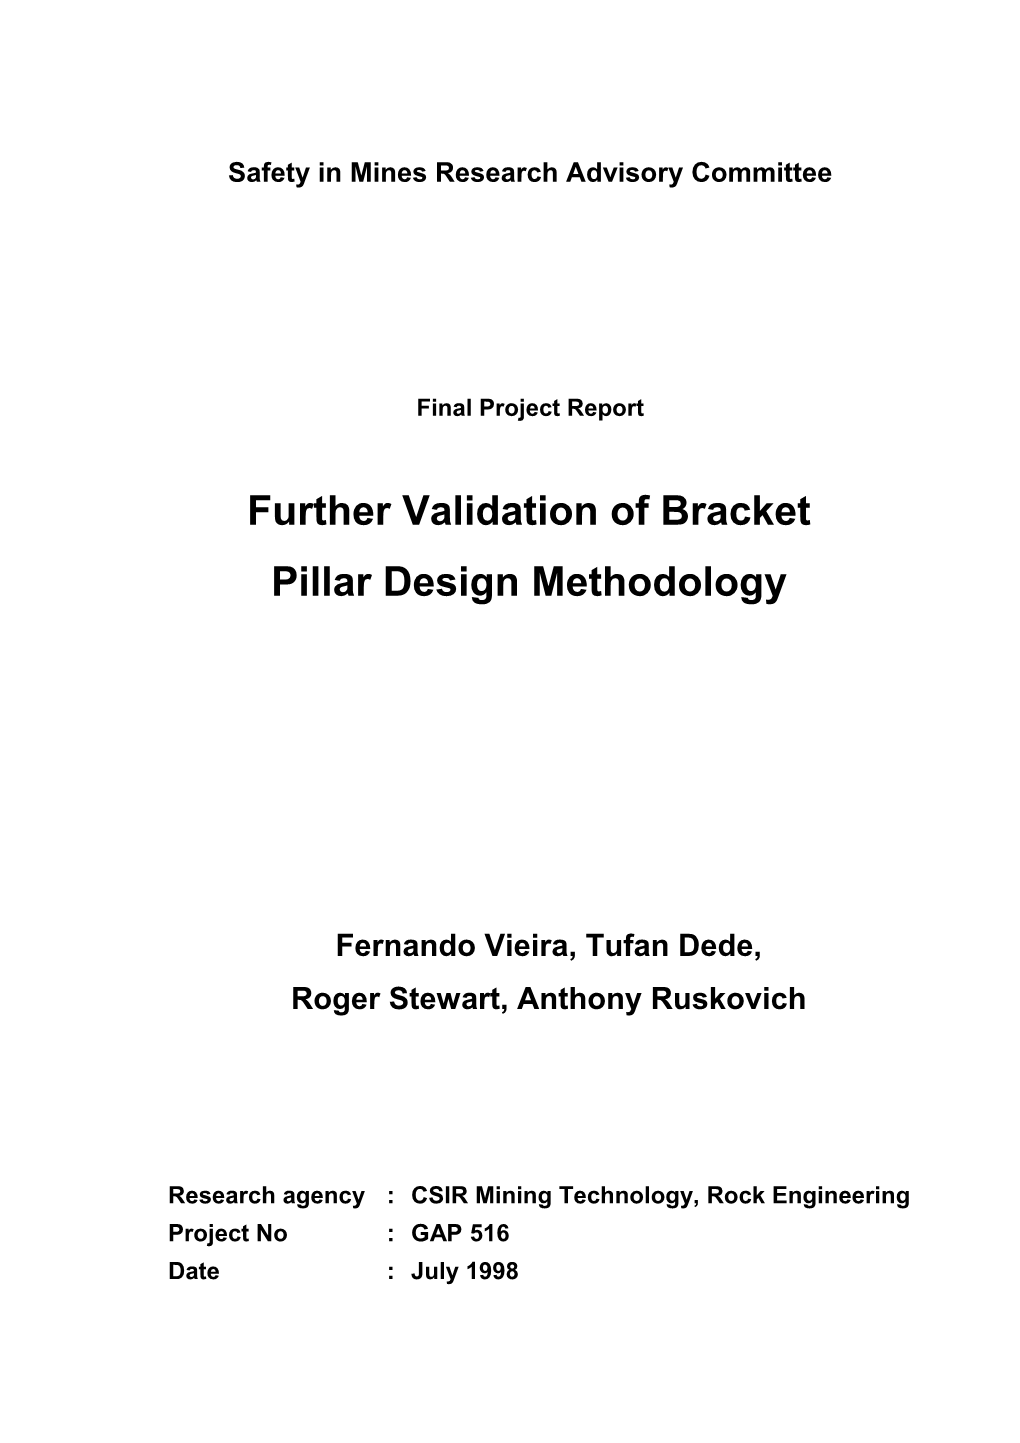 Further Validation of Bracket Pillar Design Methodology